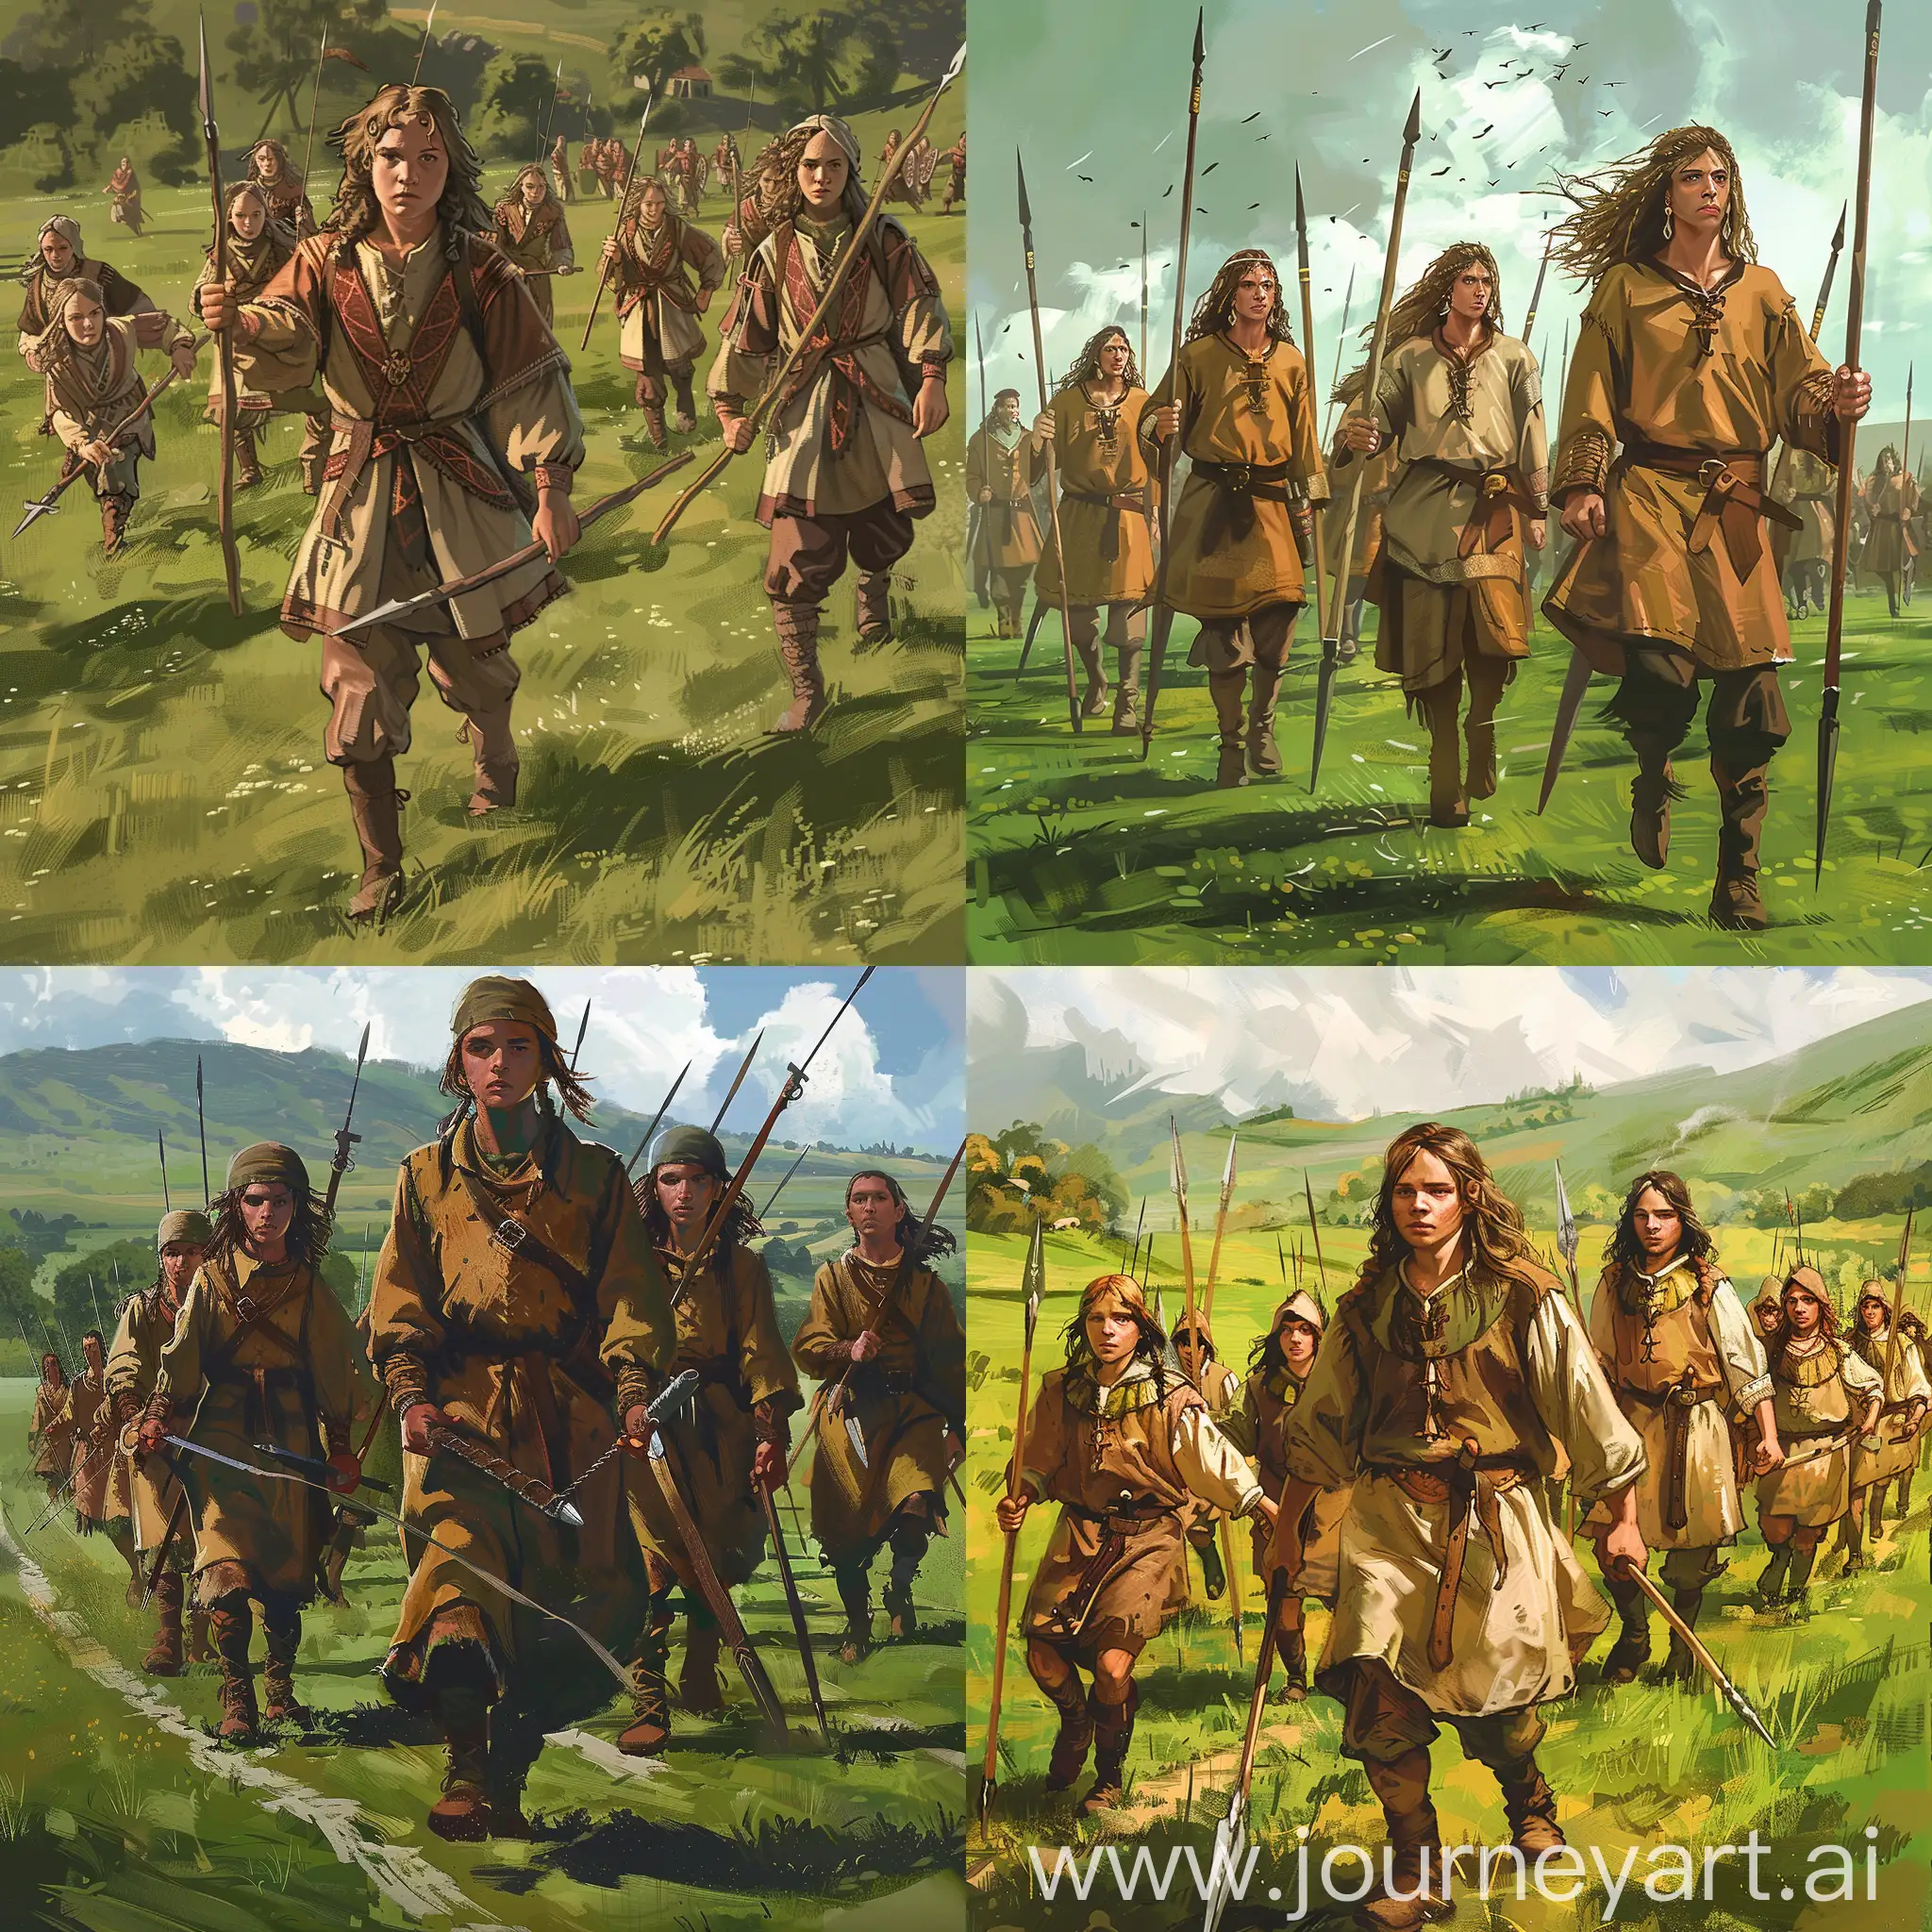 Medieval-Peasant-Warriors-Marching-Across-Verdant-Field